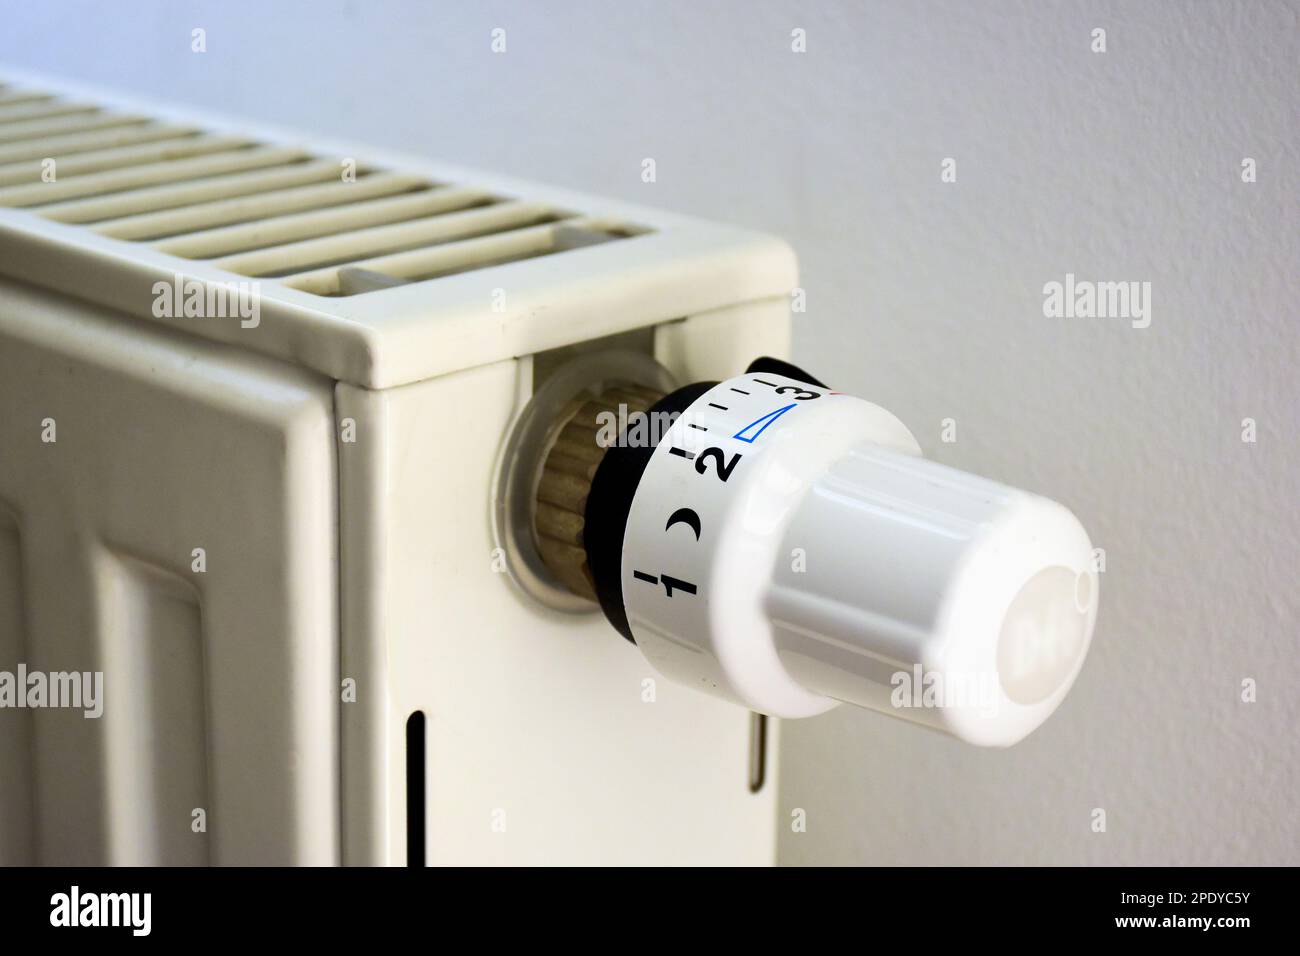 radiator temperature adjustment dial or knob in closeup view. heating regulator. natural gas usage concept. metal hot water heating unit detail. Stock Photo